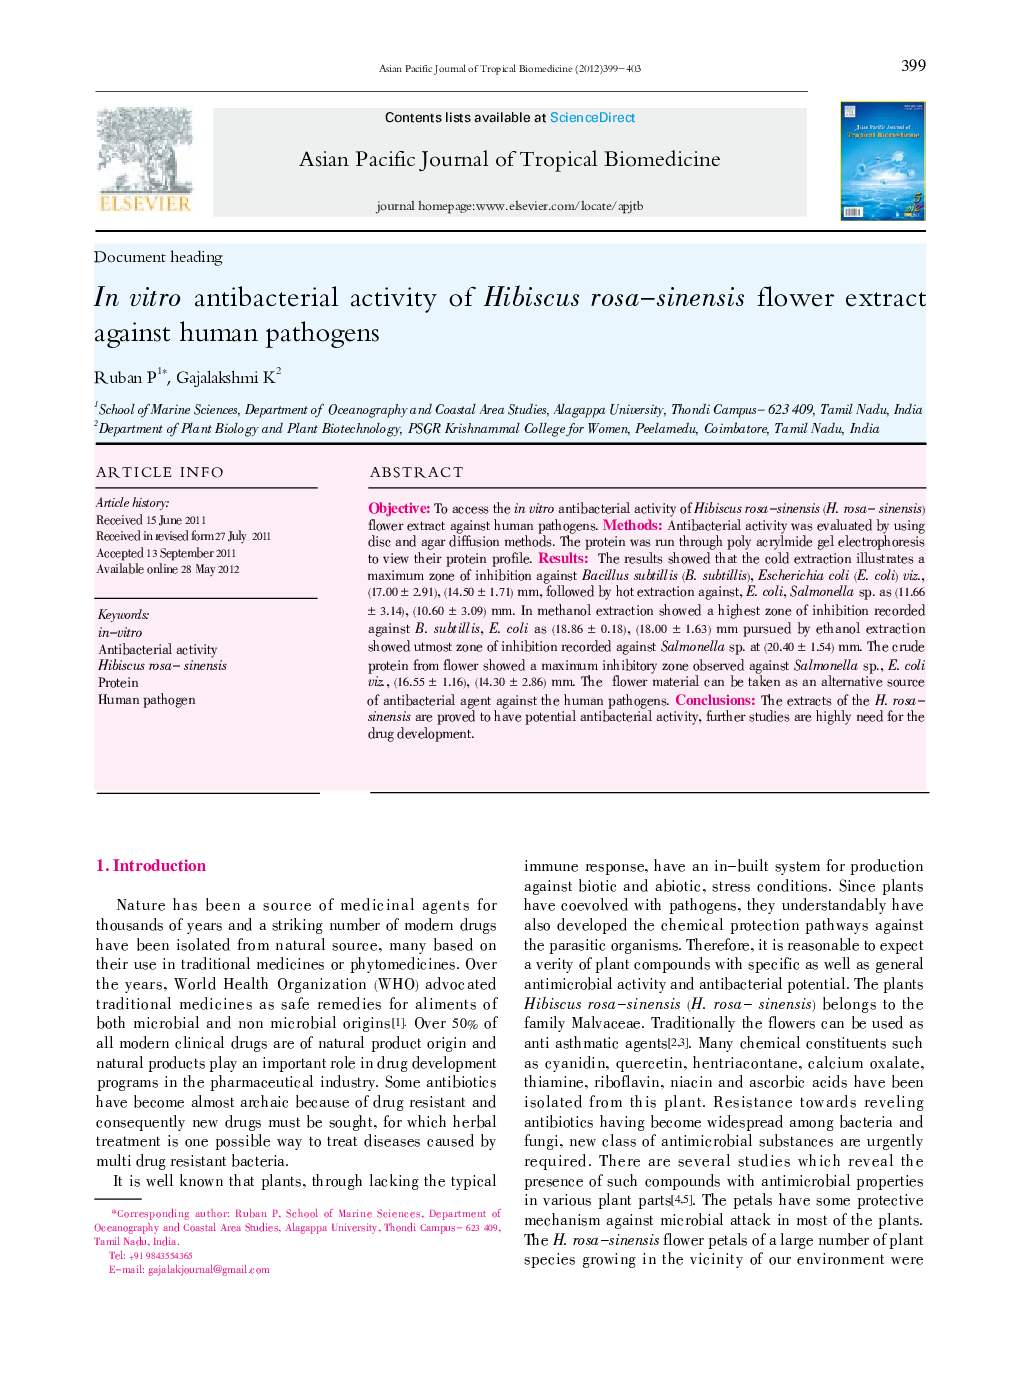 In vitro antibacterial activity of Hibiscus rosa-sinensis flower extract against human pathogens